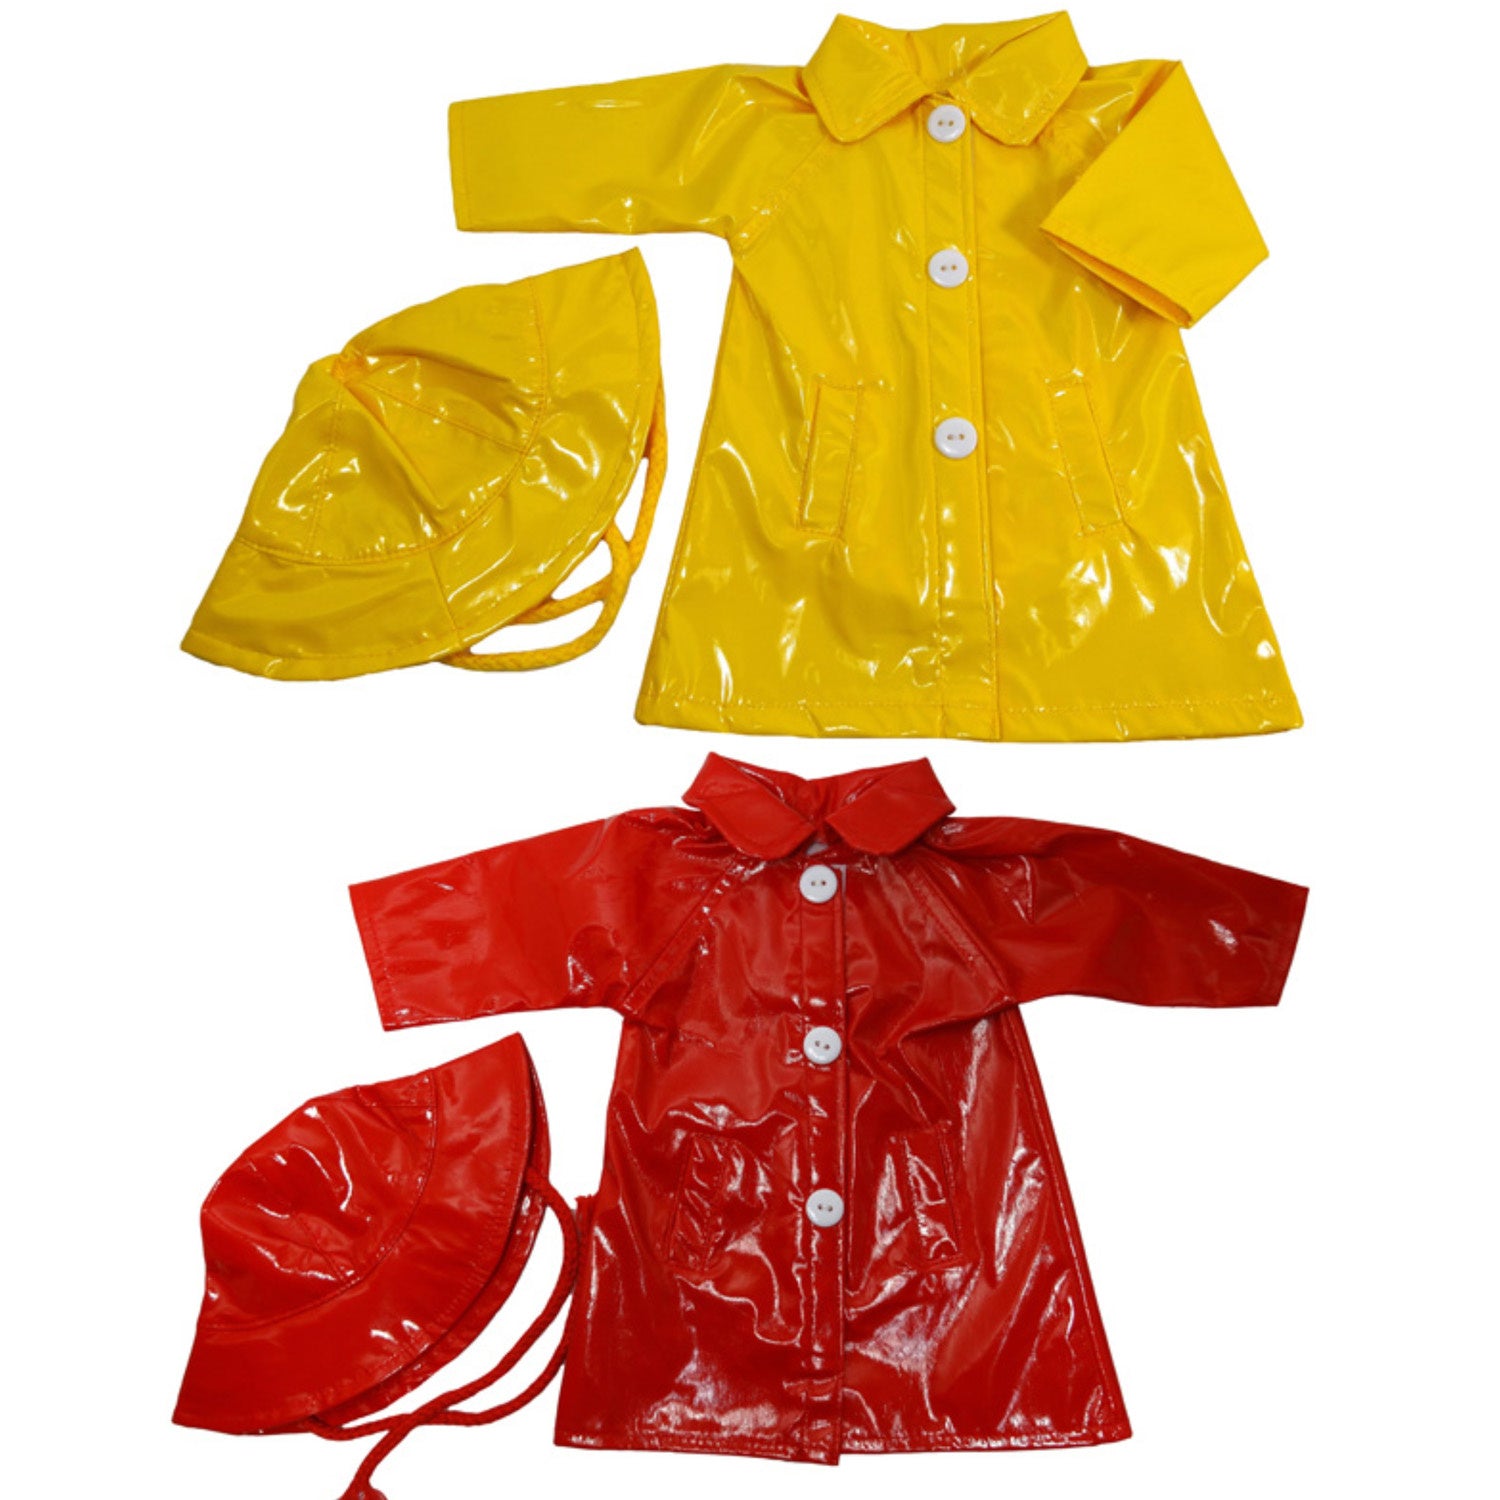 Dolls Rain Coat & Hat - Red or Yellow